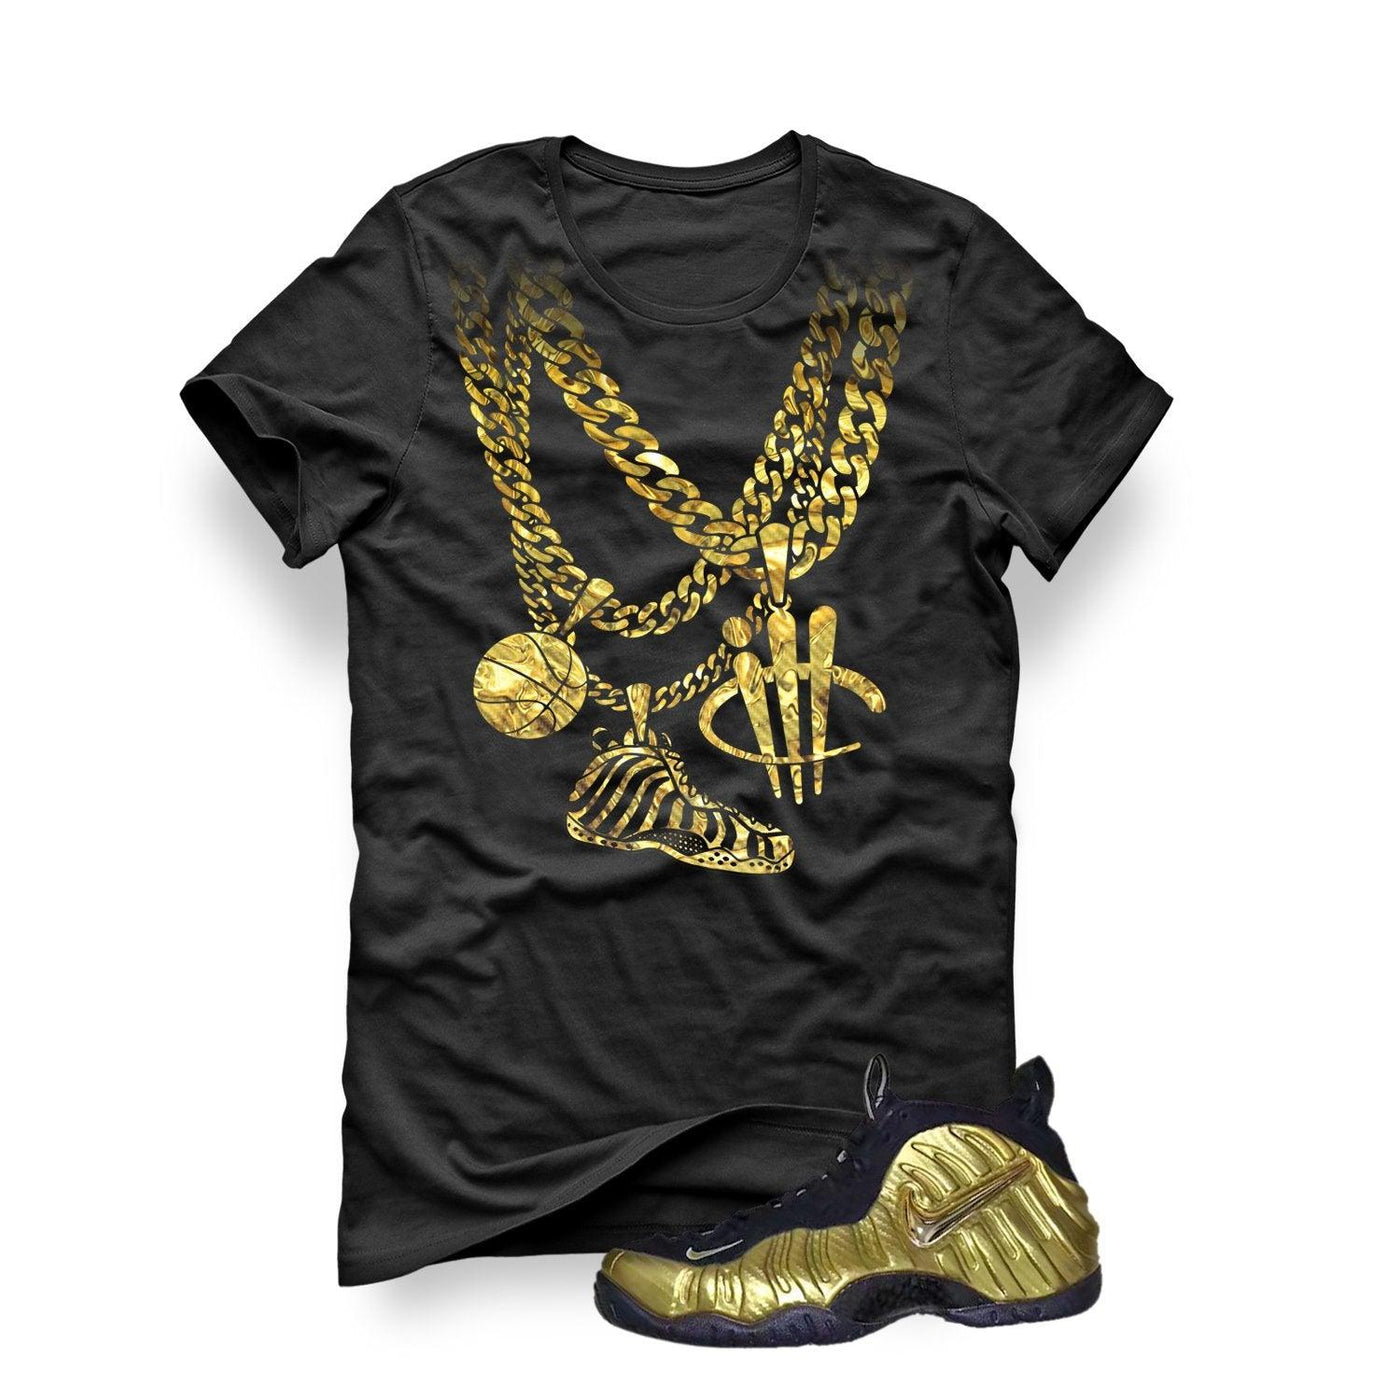 Nike Air Foamposite Pro Metallic Gold Black T (Chain)